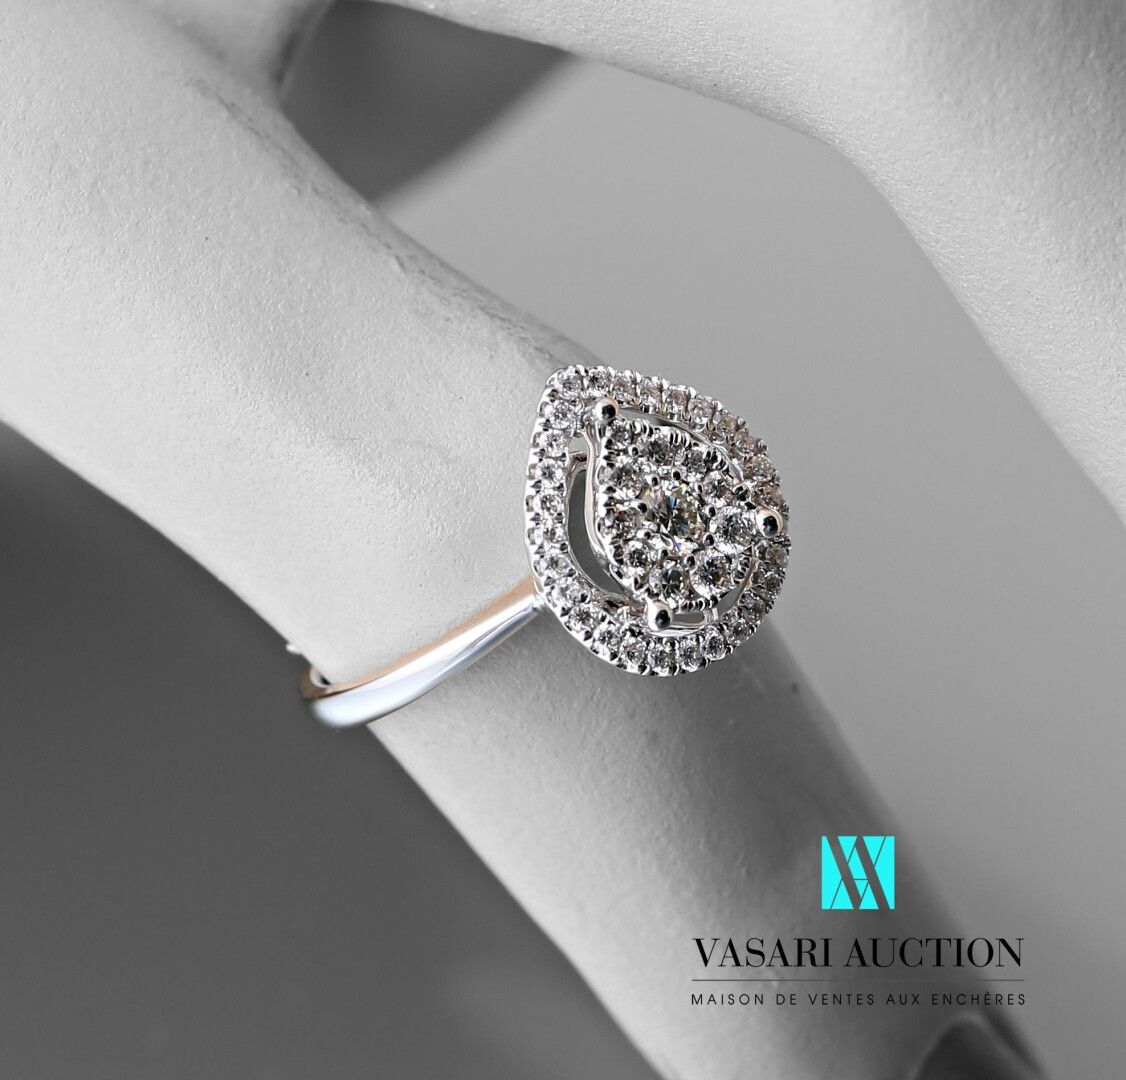 Null 镂空梨形戒指，白金75千分之一，镶嵌现代切割钻石，总重约0.35克拉。

毛重：2.68克 - 手指尺寸：50